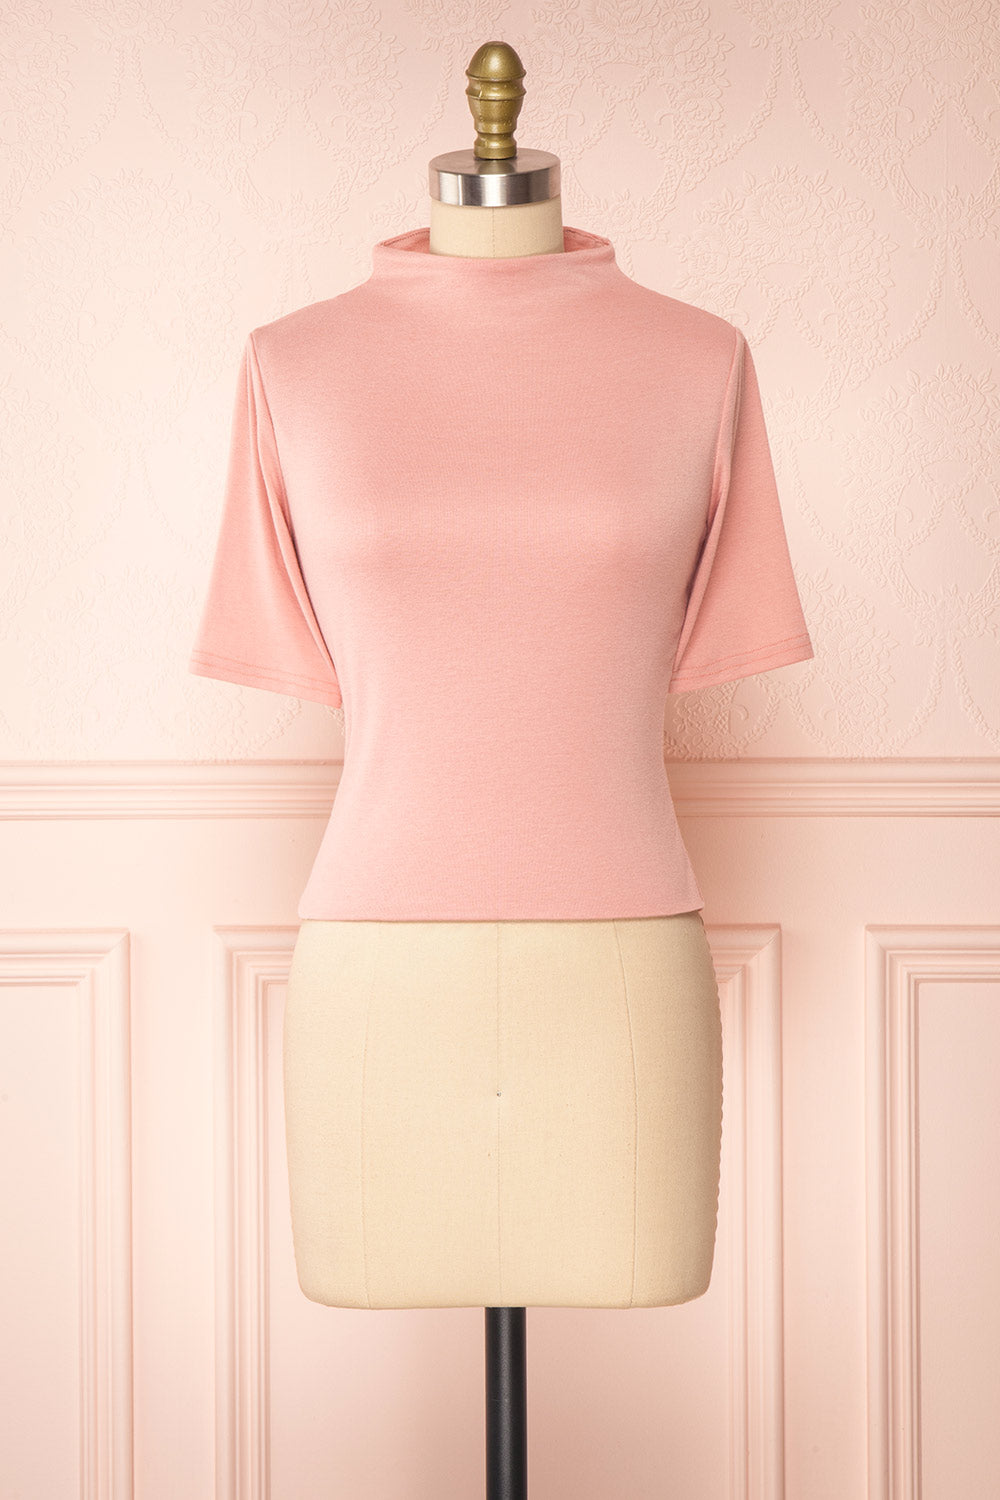 Agnees Pink Mock Neck Crop T-Shirt | Boutique 1861 front view 